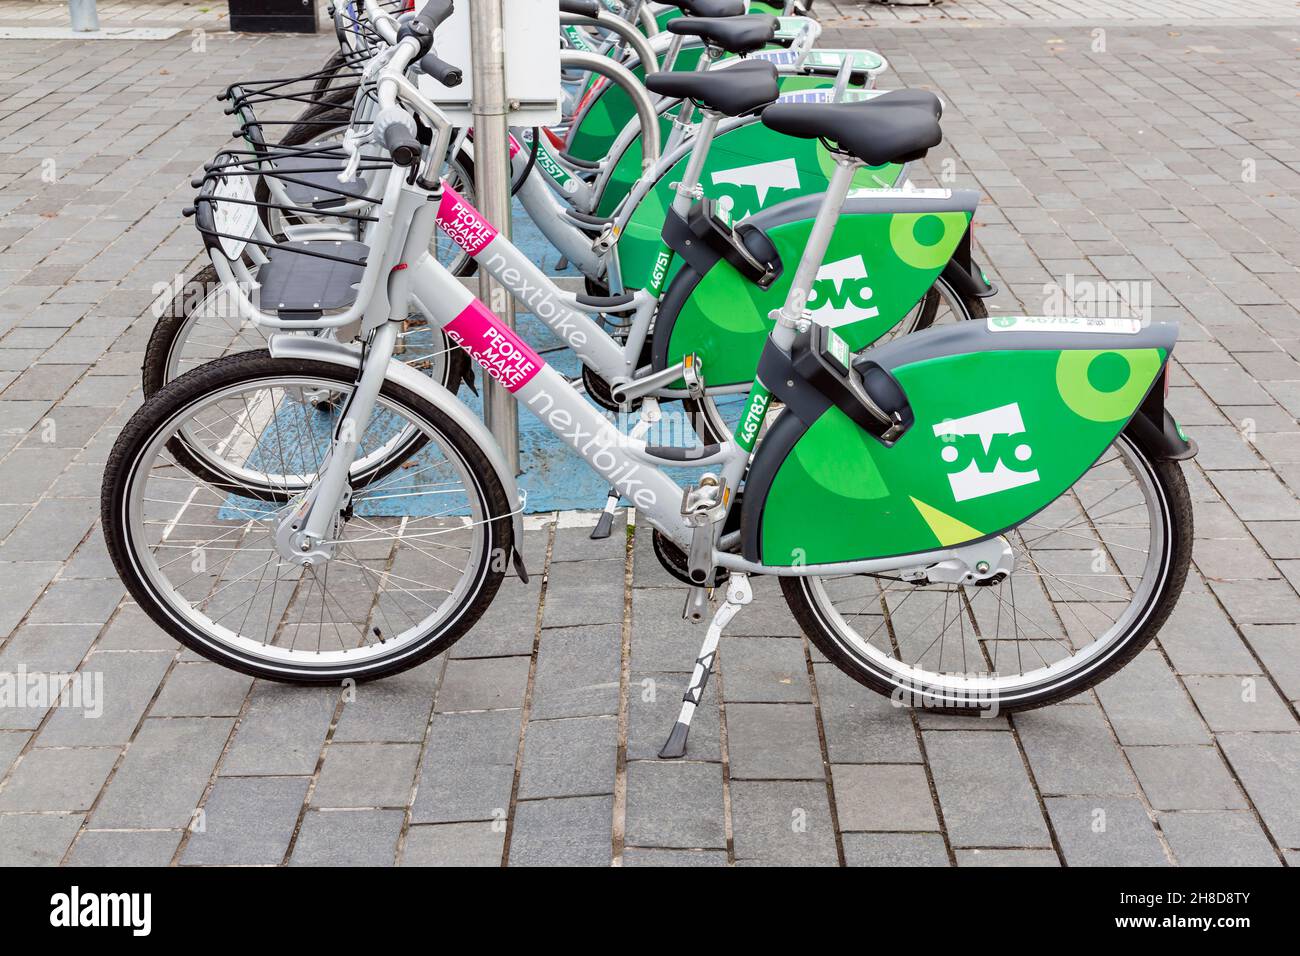 OVO Energy bicycles for hire, Glasgow city centre, Scotland, UK Stock Photo  - Alamy